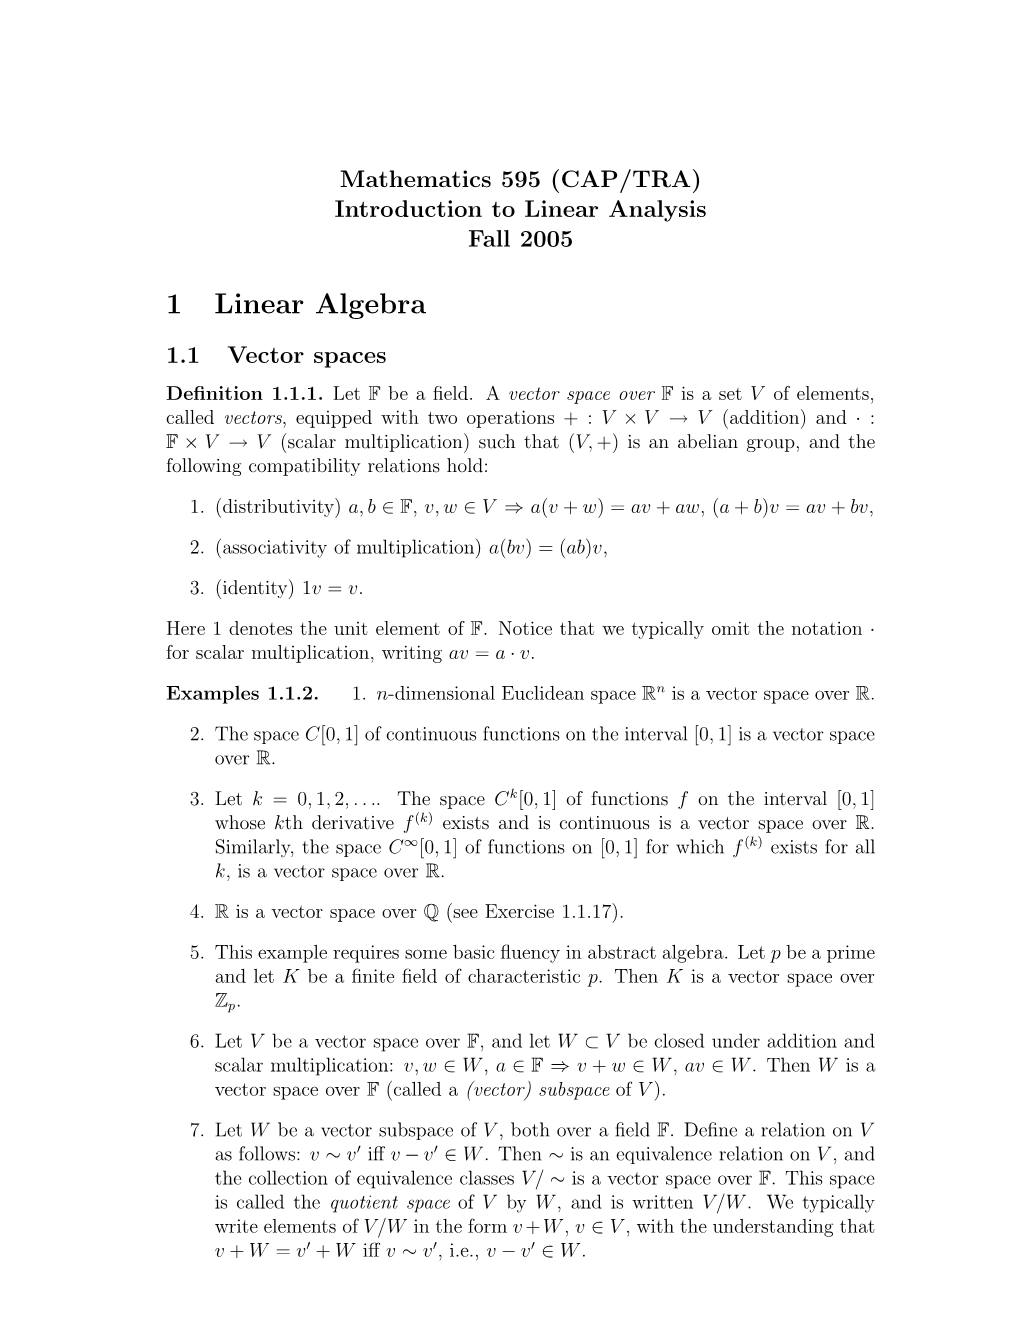 1 Linear Algebra